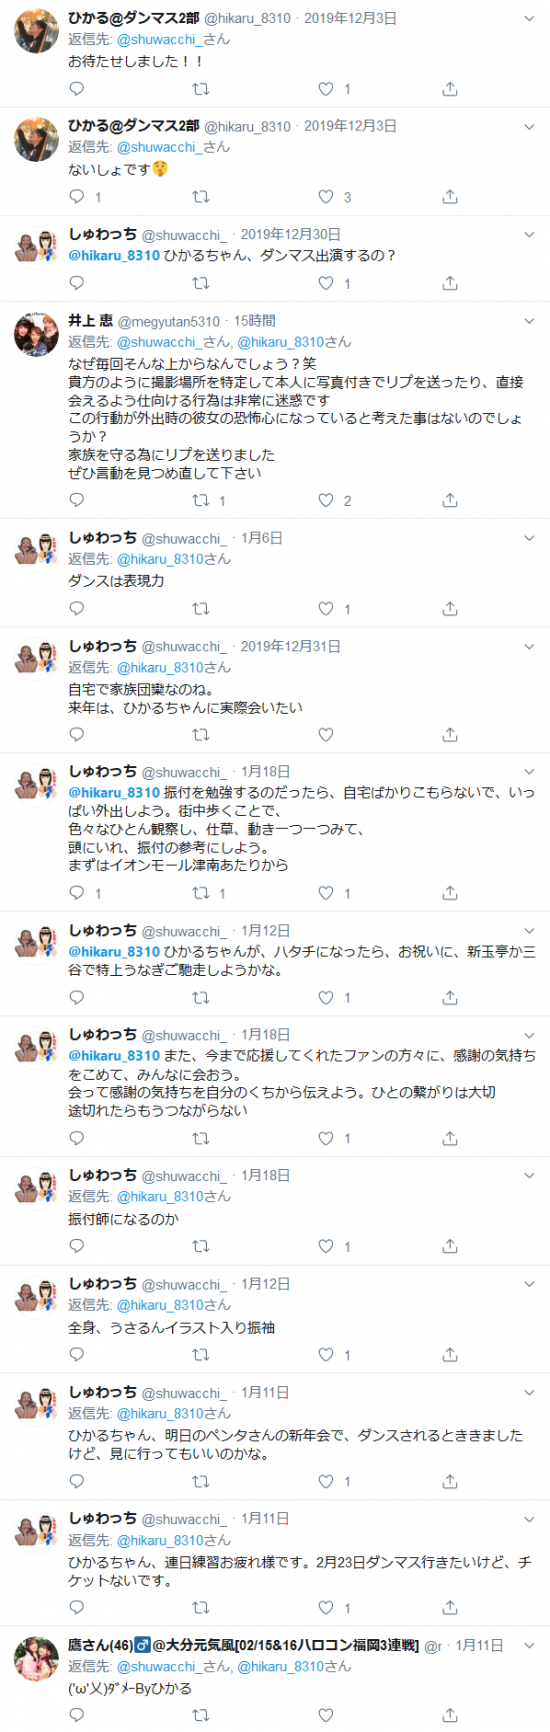 Screenshot_2020-01-19 hikaru_8310 shuwacchi_ - Twitter検索 Twitter.png